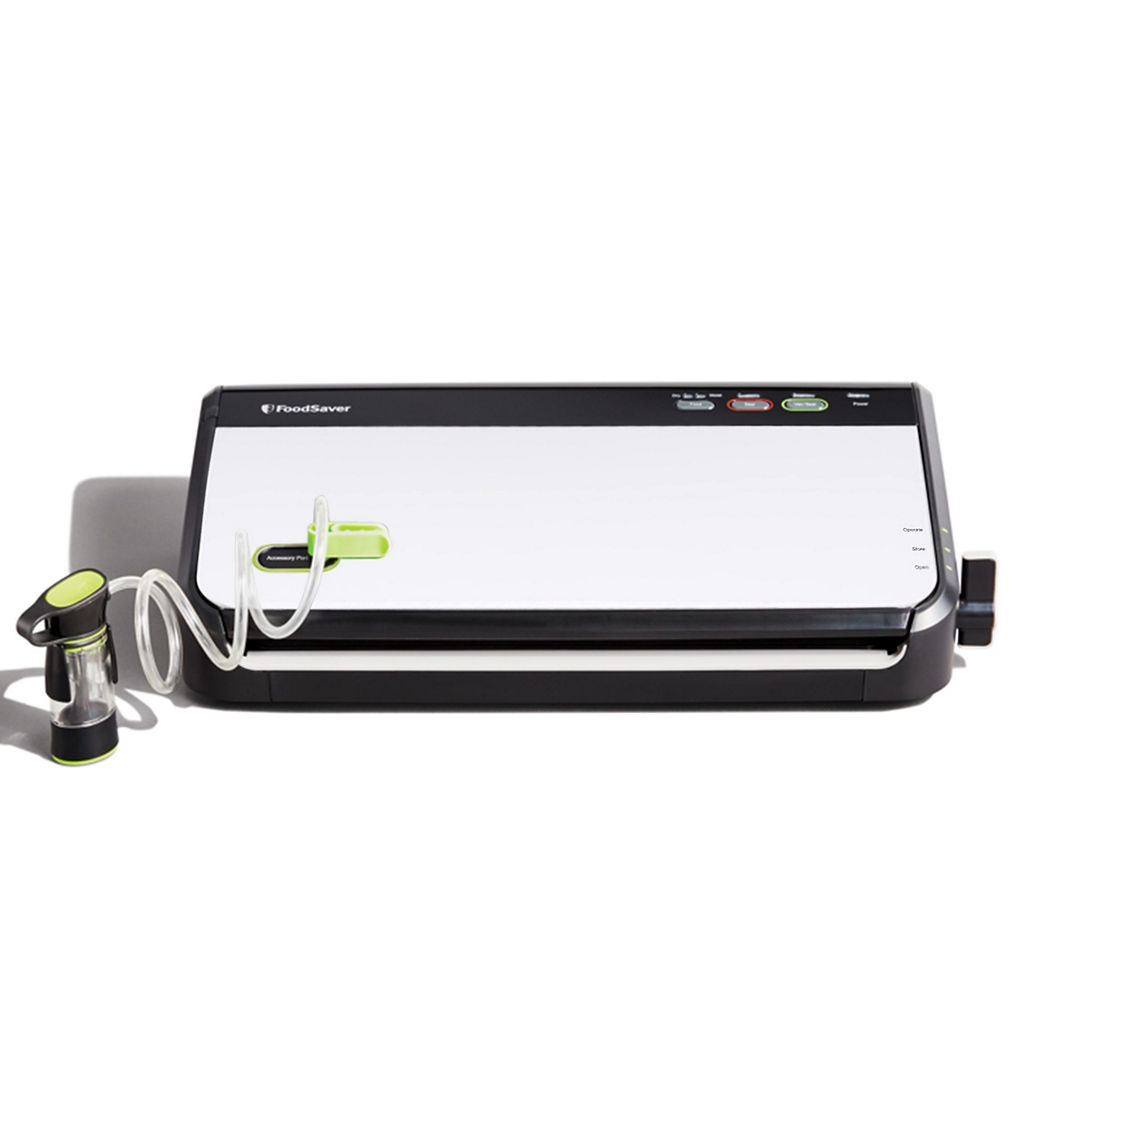 FoodSaver Vacuum Sealer Machine System with Bonus Handheld Vacuum Sealer in Whit - Image 2 of 4